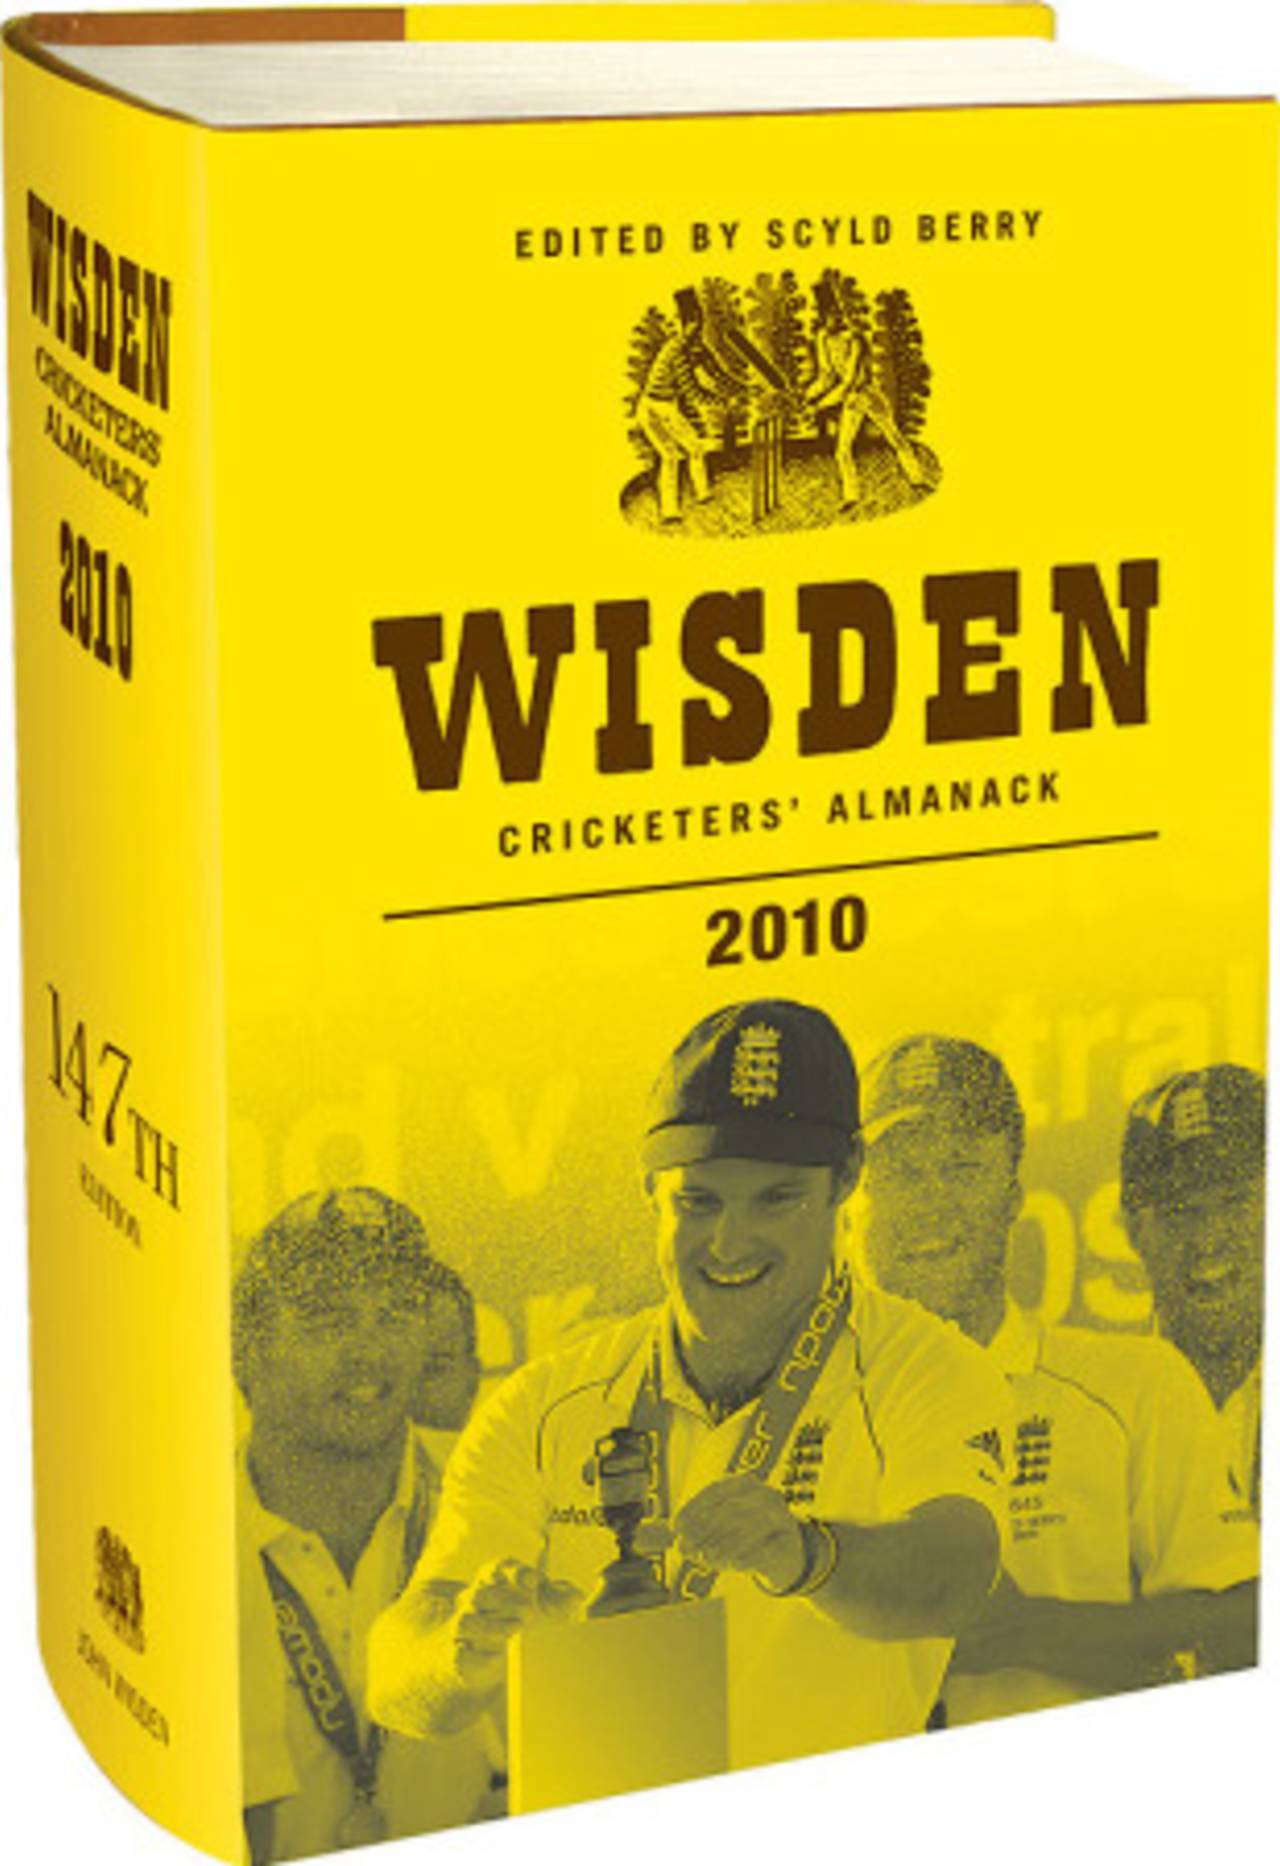 Wisden 2010 takes an in-depth look at England's Ashes victory&nbsp;&nbsp;&bull;&nbsp;&nbsp;John Wisden & Co